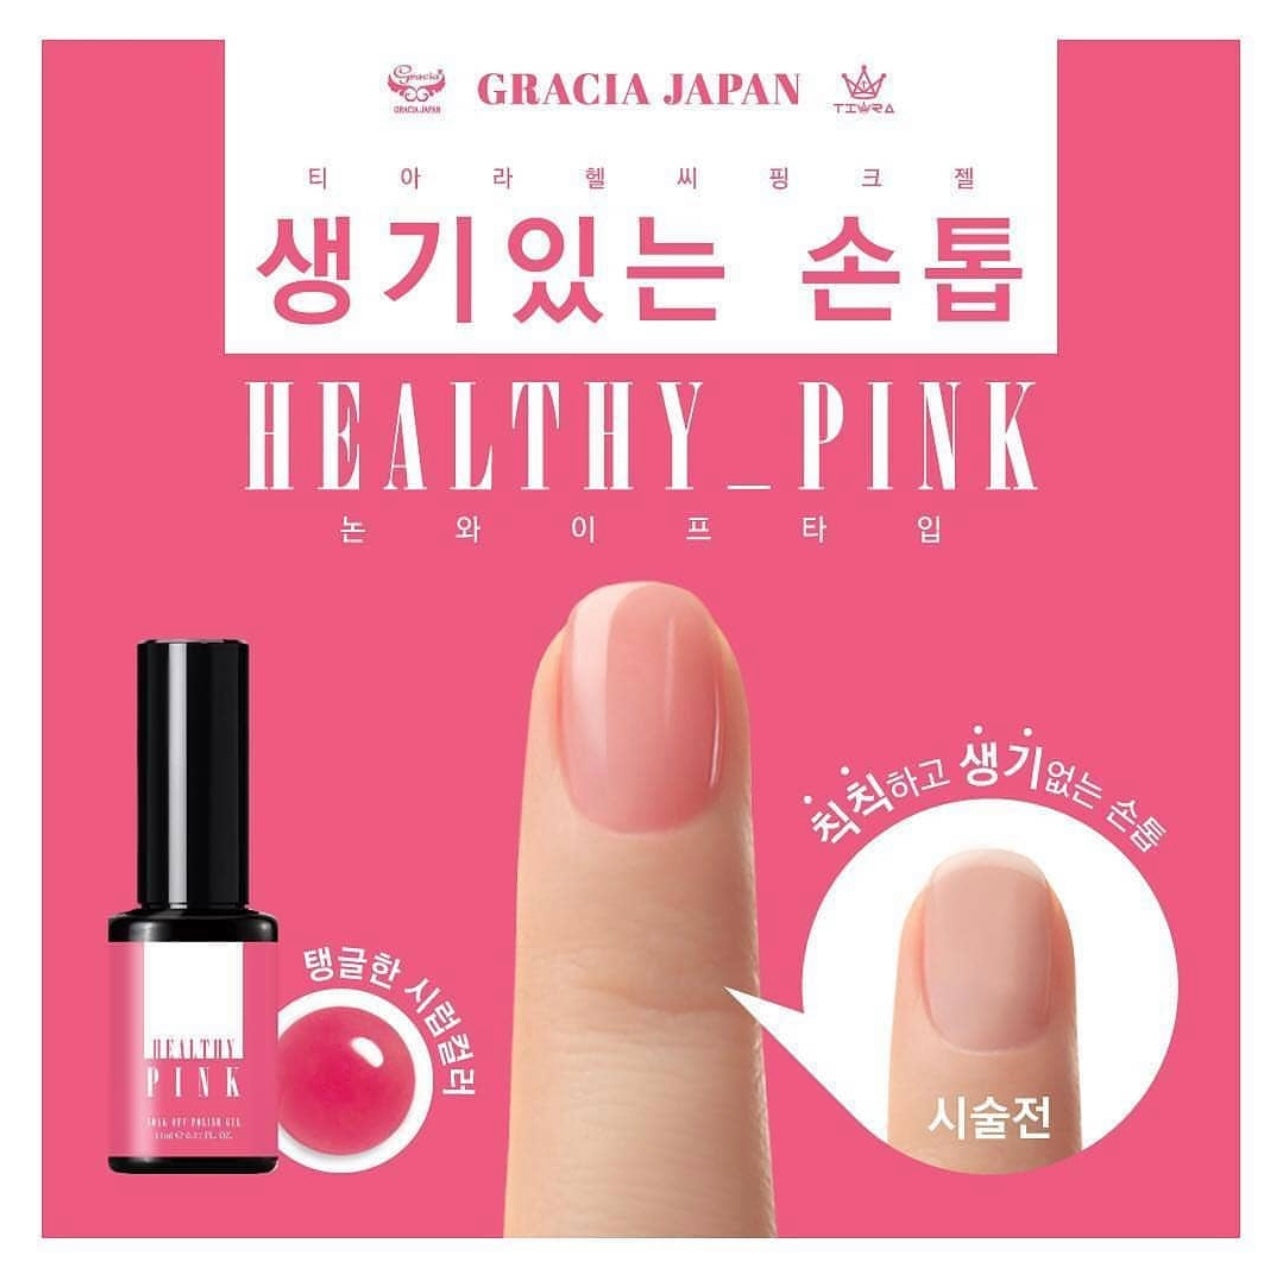 TIARA - Healthy Pink